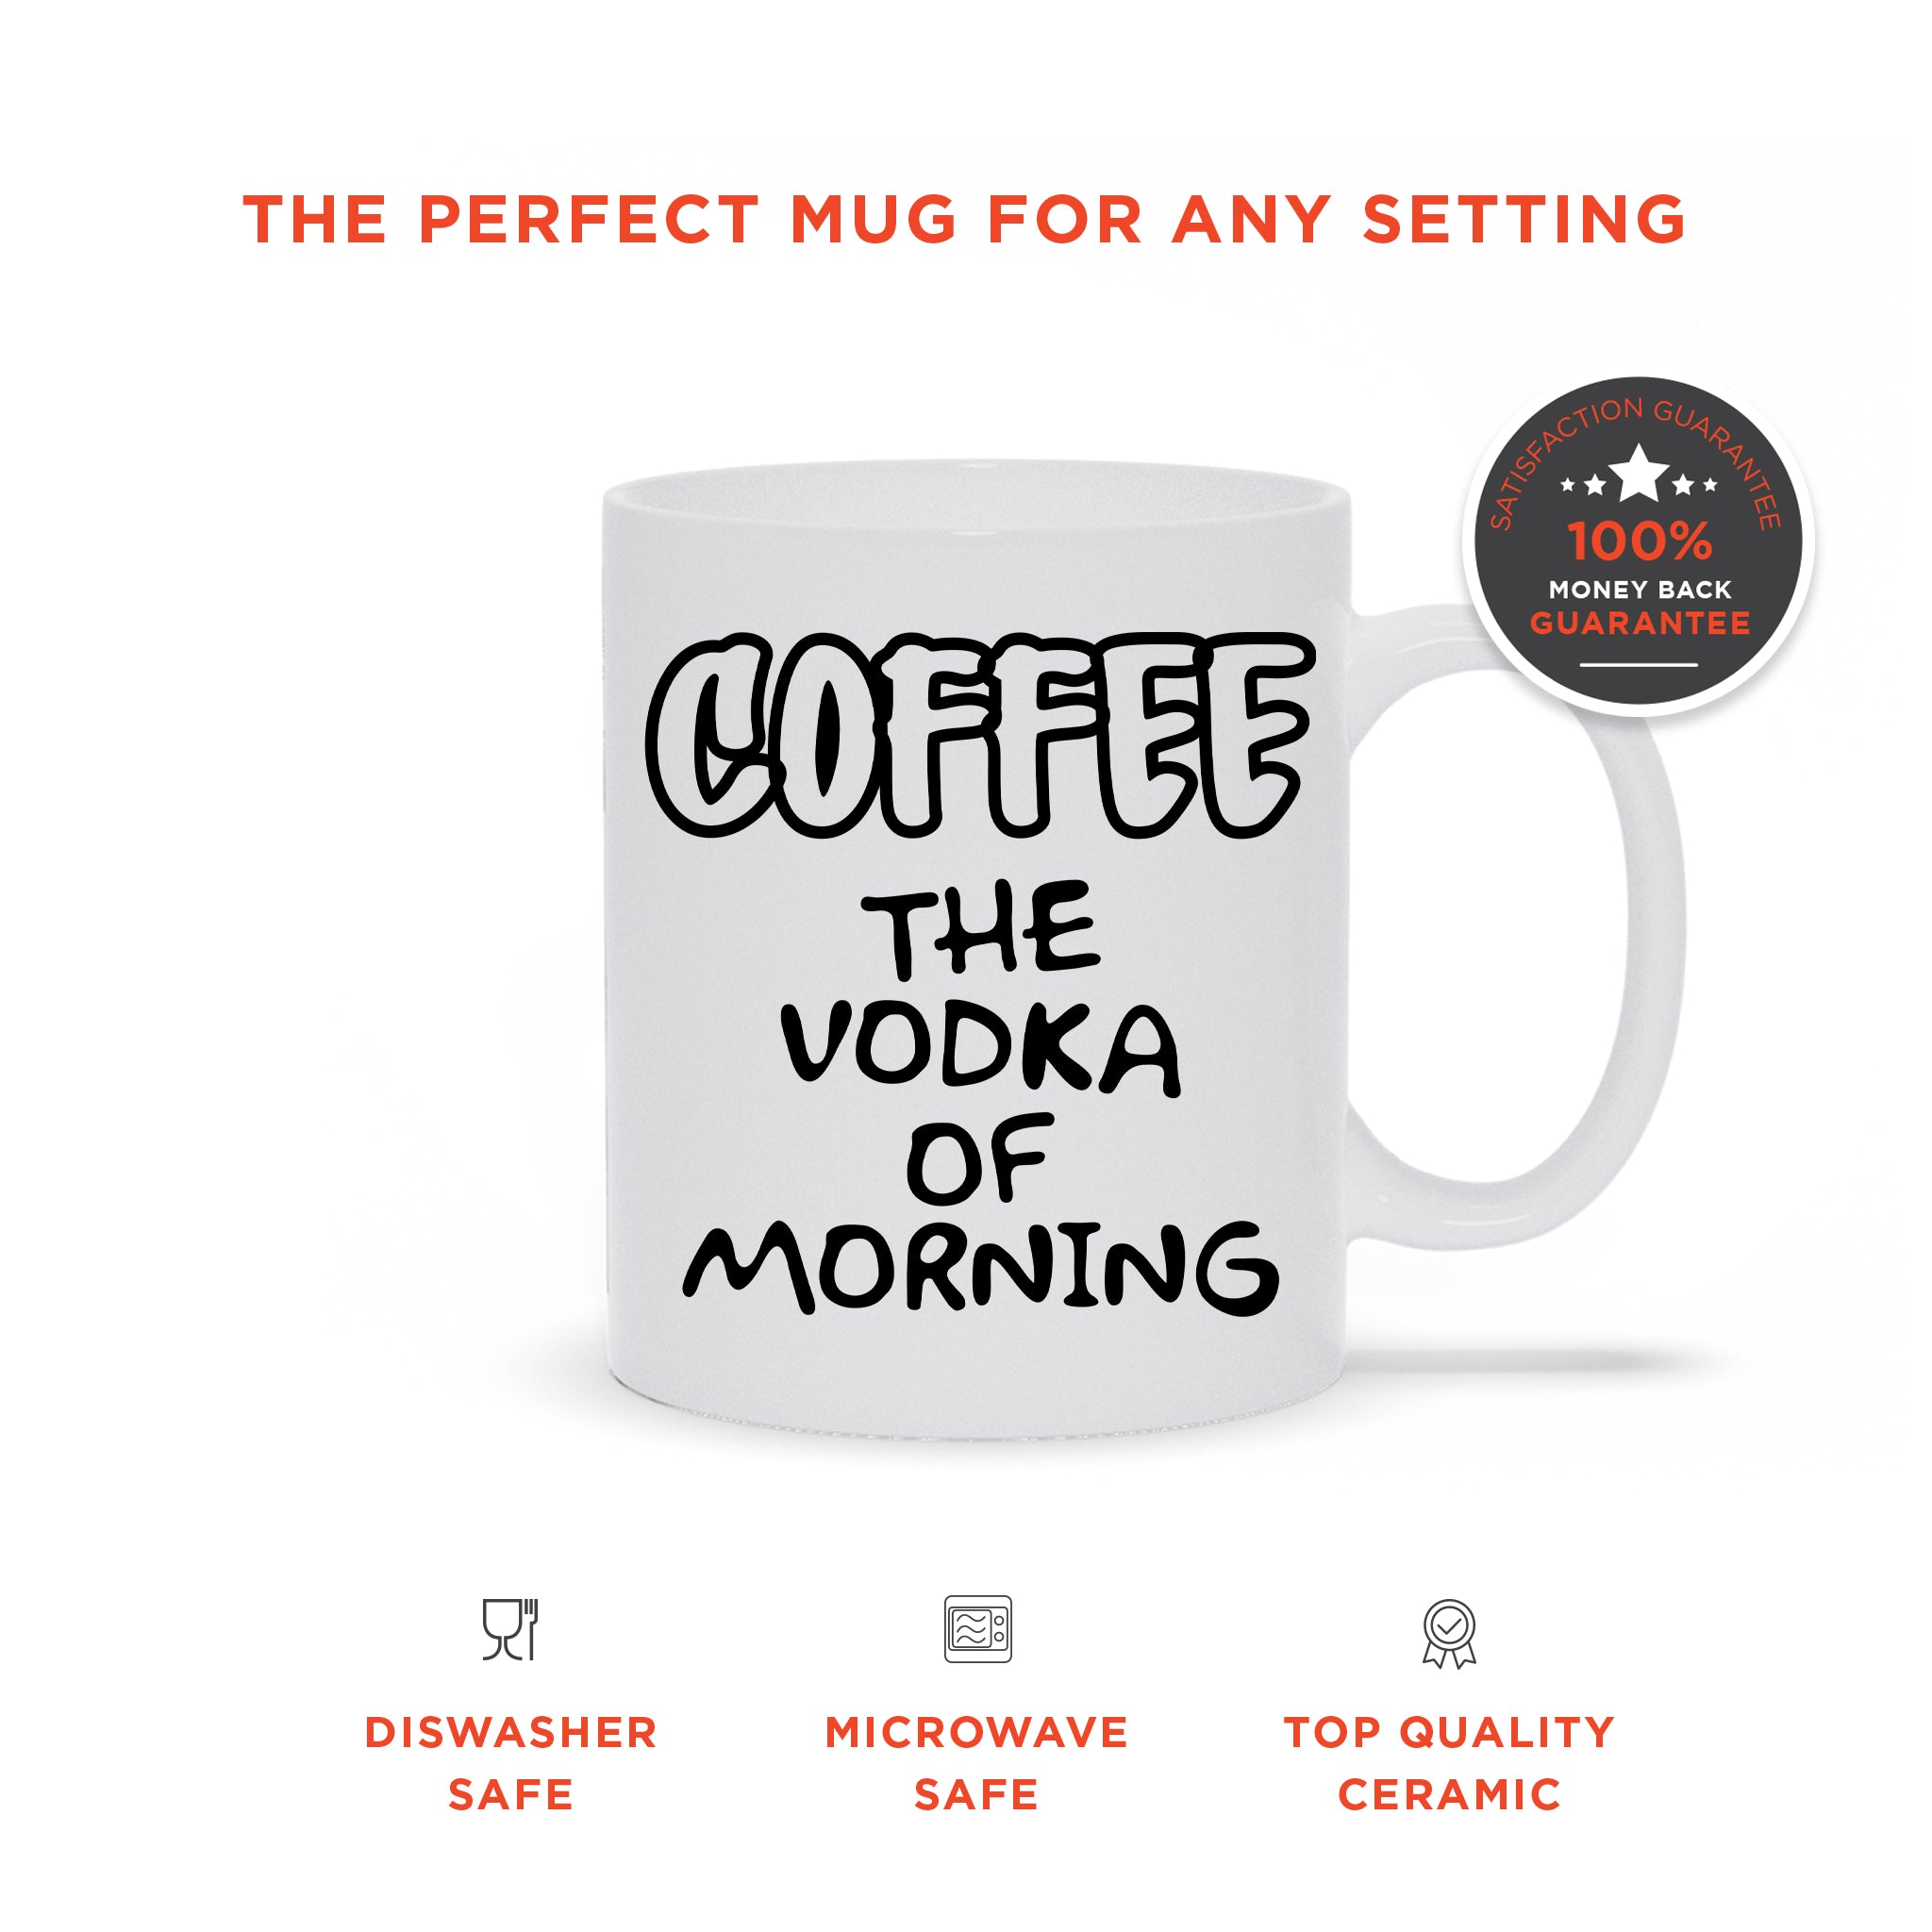 Coffee: The Vodka Of Morning Mug